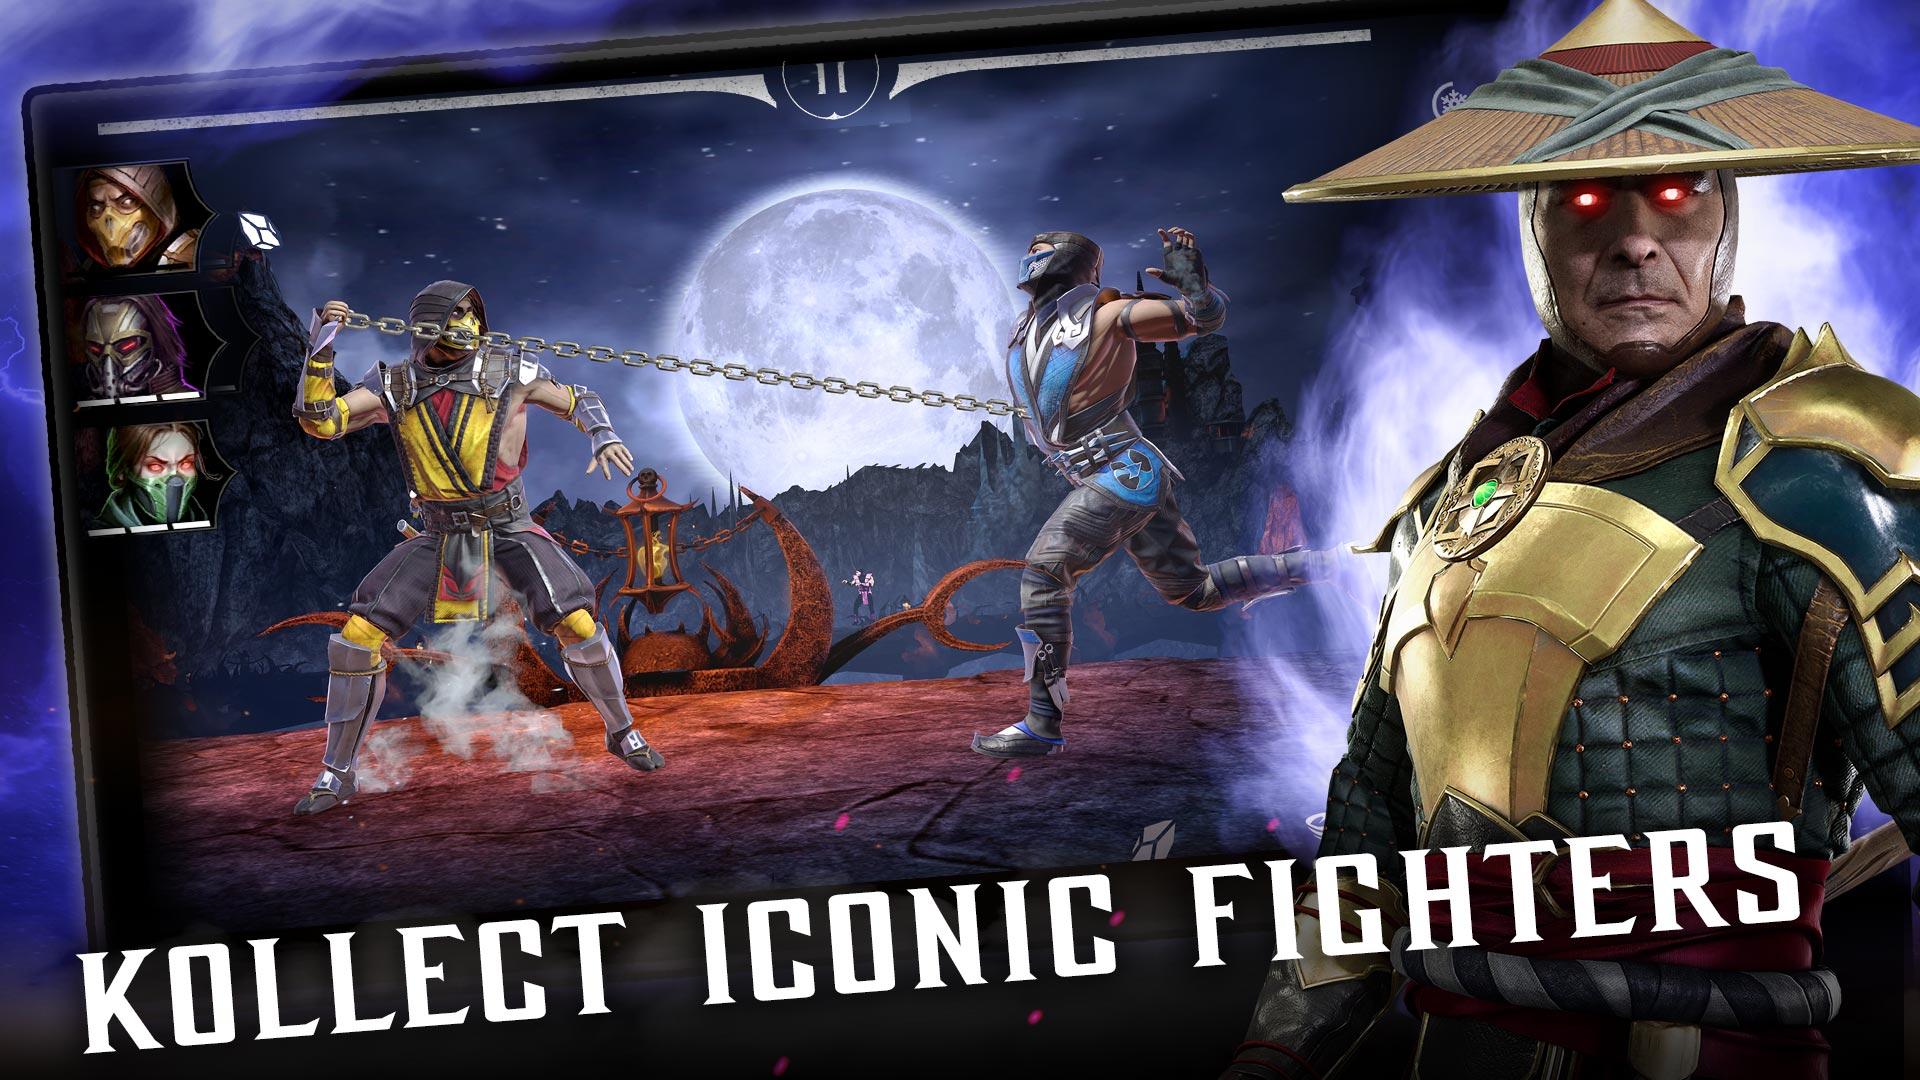 Download Fierce Mortal Kombat Warrior - Baraka Unleashes His Blades  Wallpaper